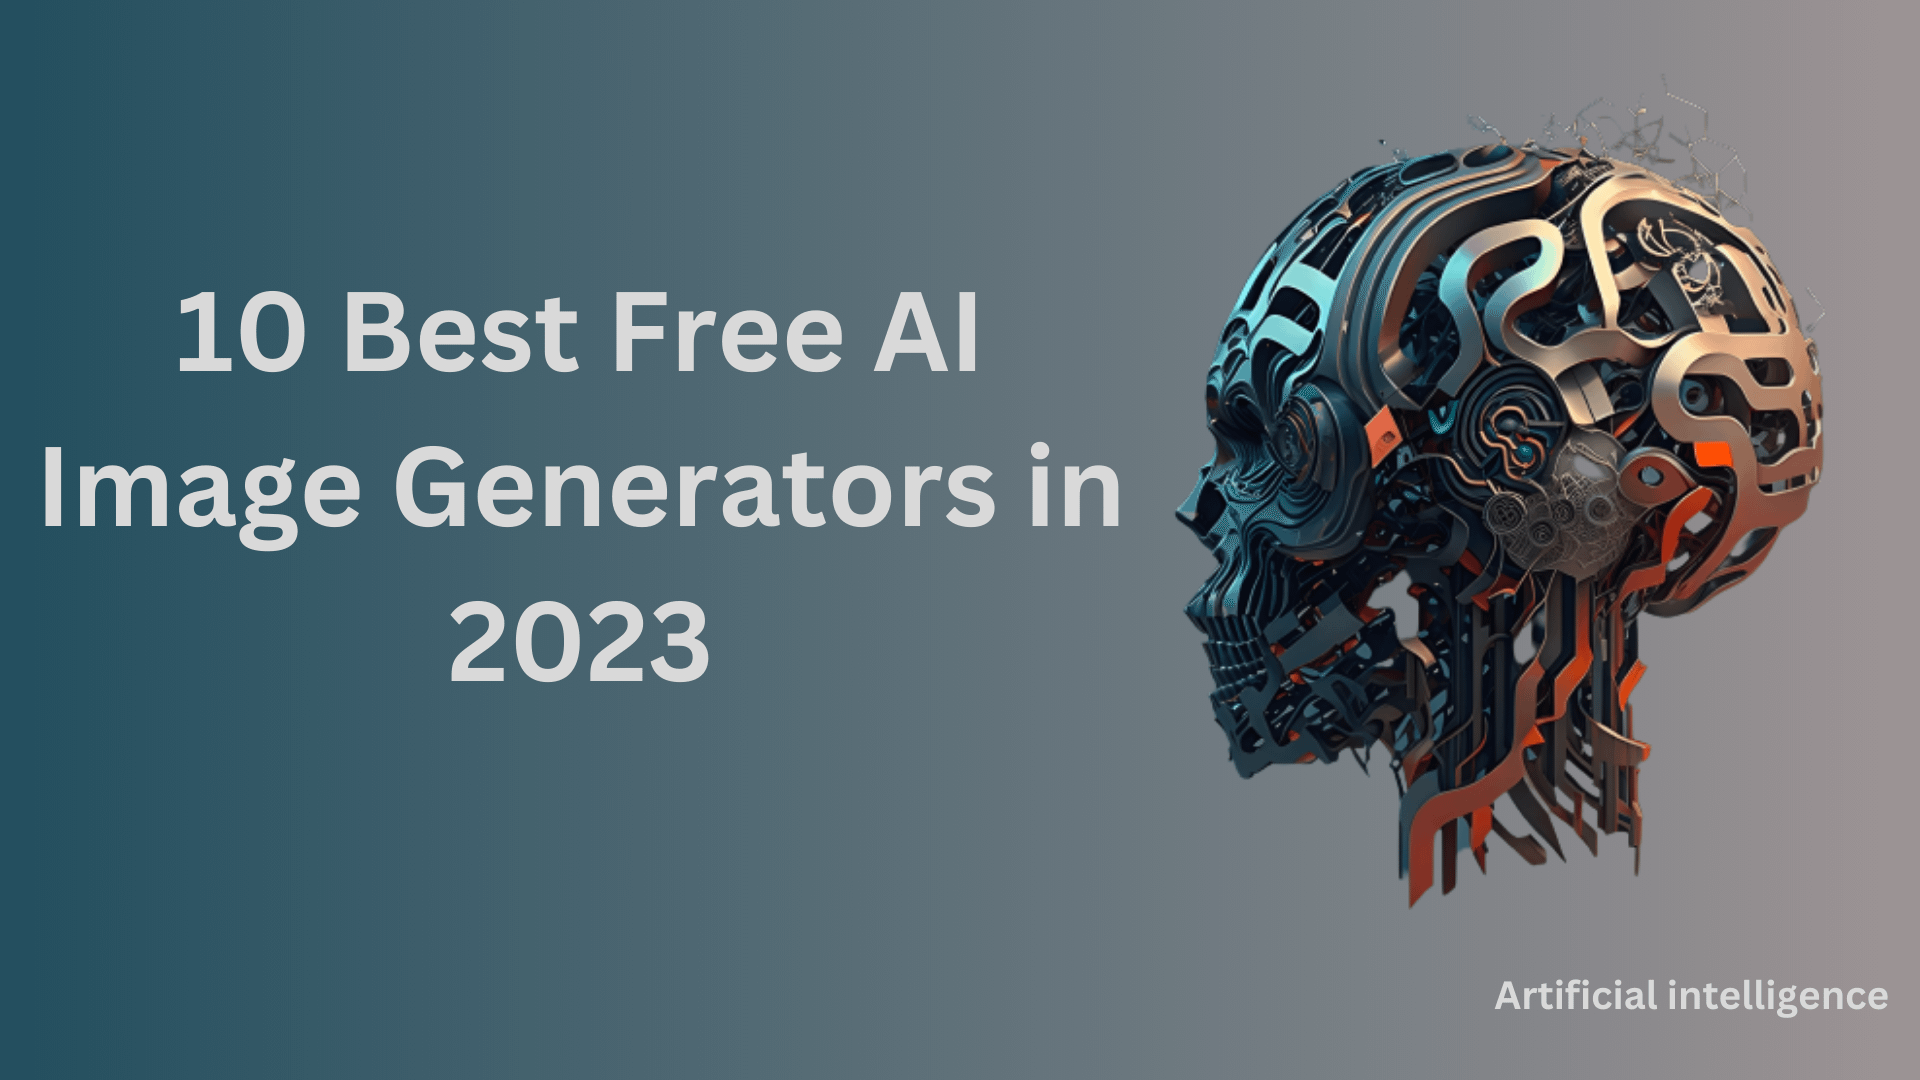 10 Best Free AI Image Generators in 2023